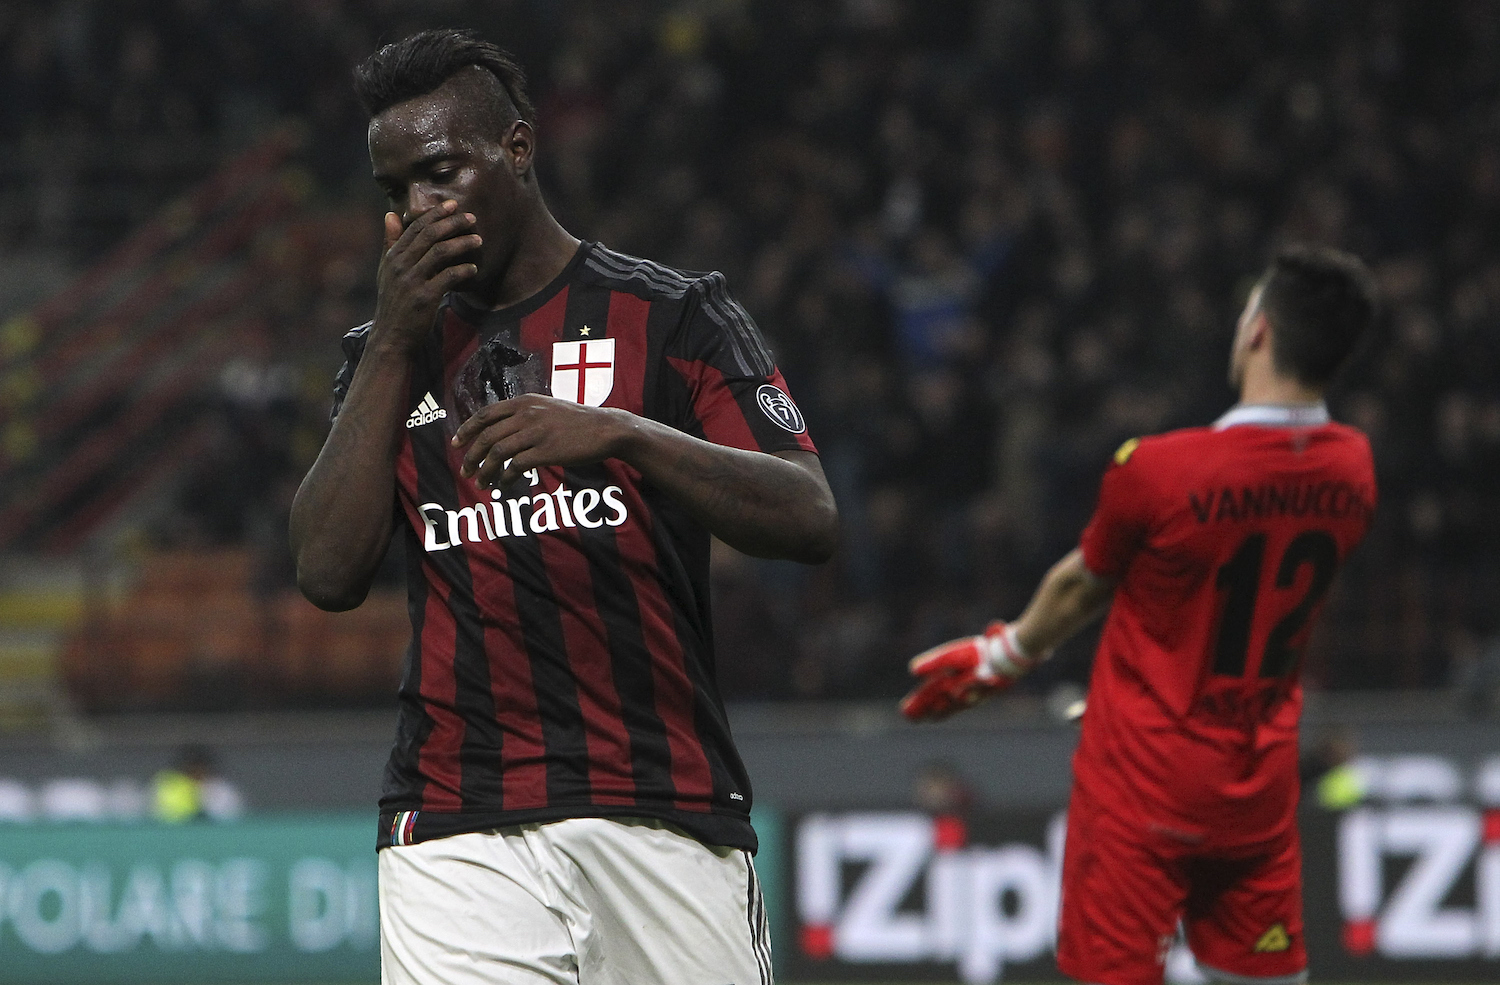 Balotelli refuses to celebrate his goal. | Marco Luzzani/Getty Images